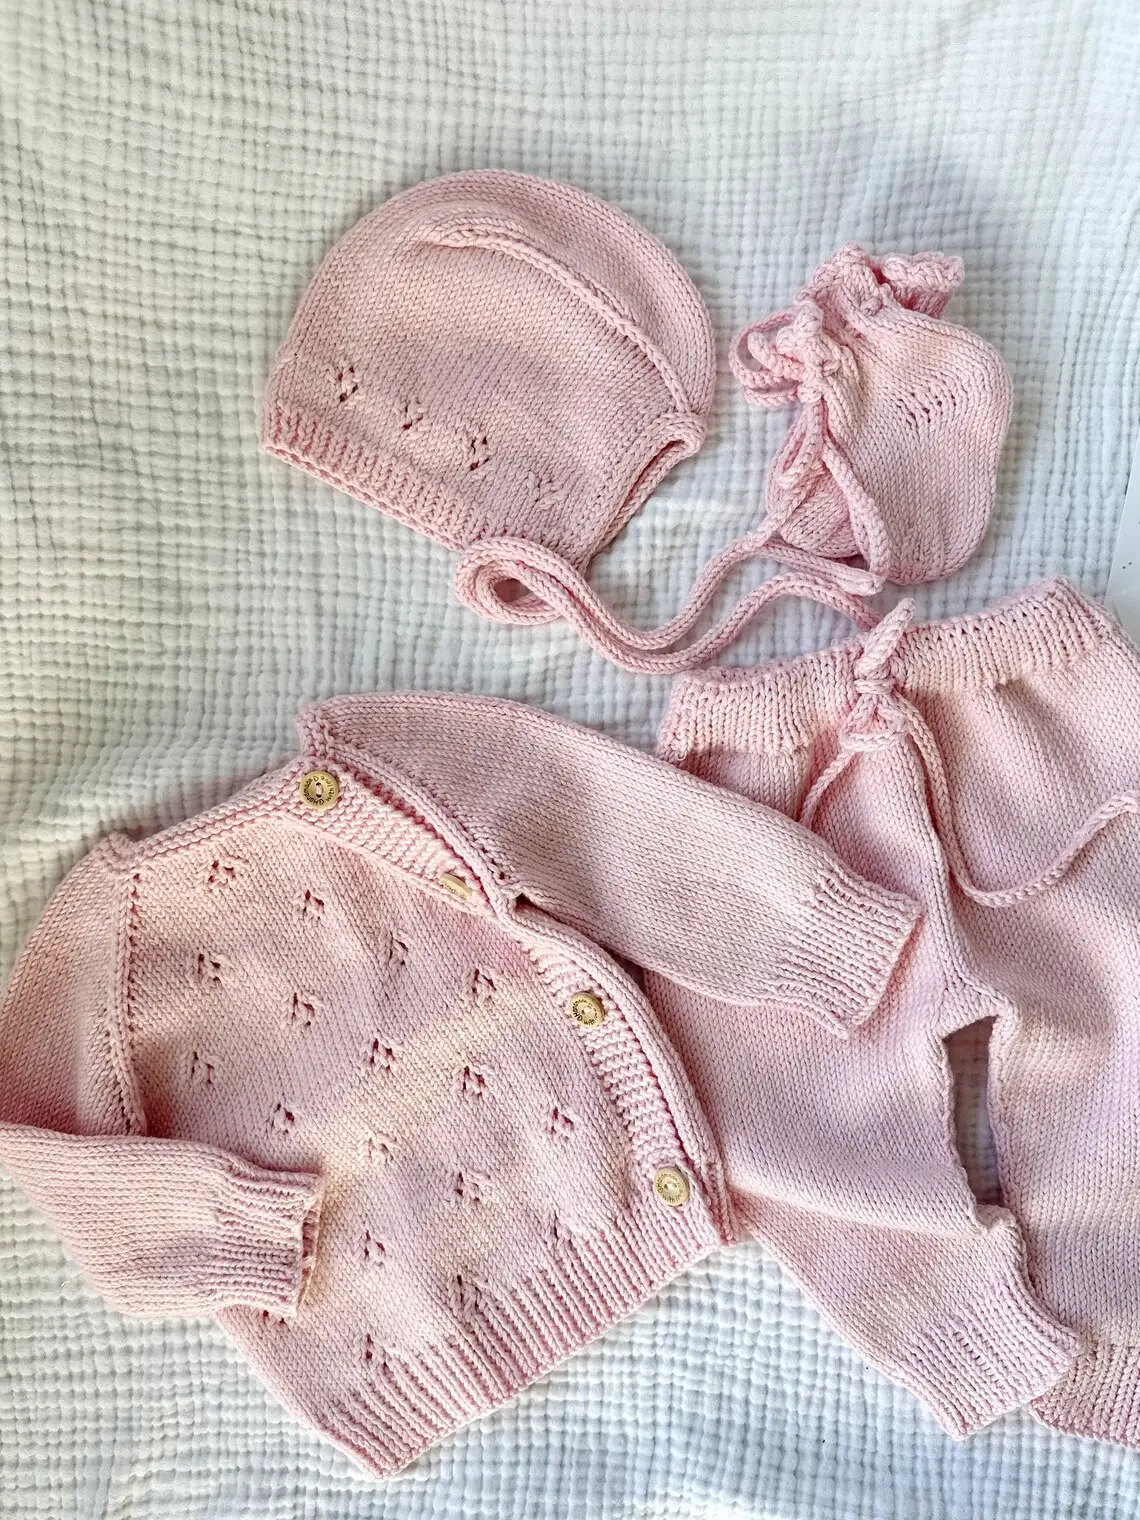 Newborn Cotton Cardigan Kimono Top Pant Set Spring Baby 4pcs Cotton Outfit Beanie Booties Set